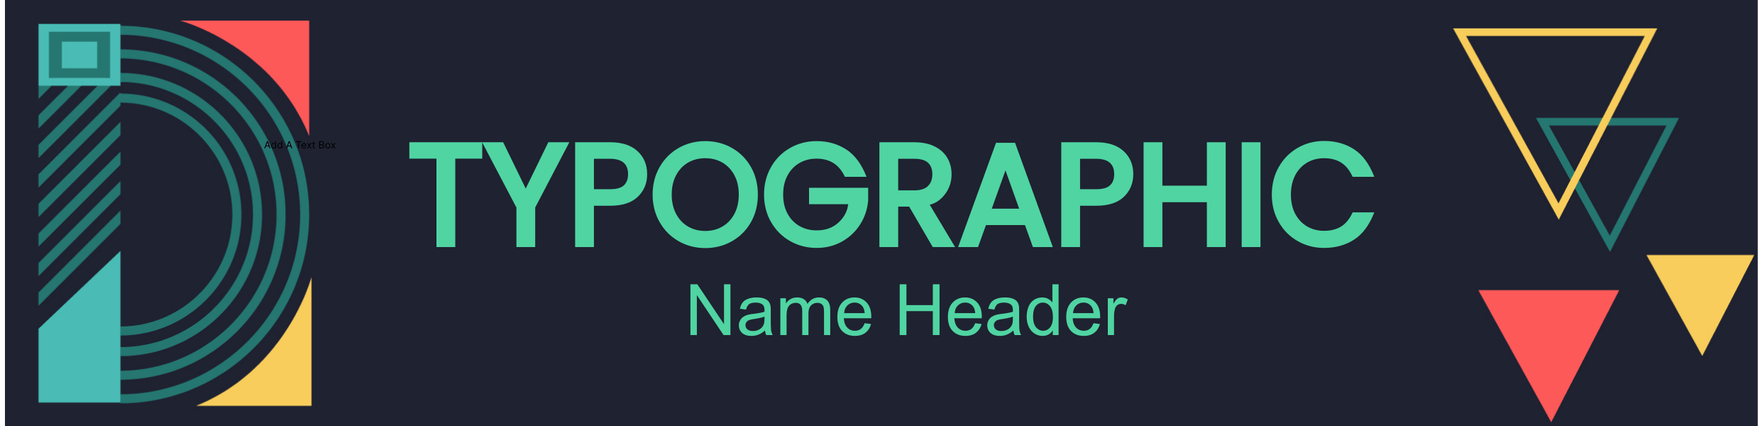 Typographic Name Header